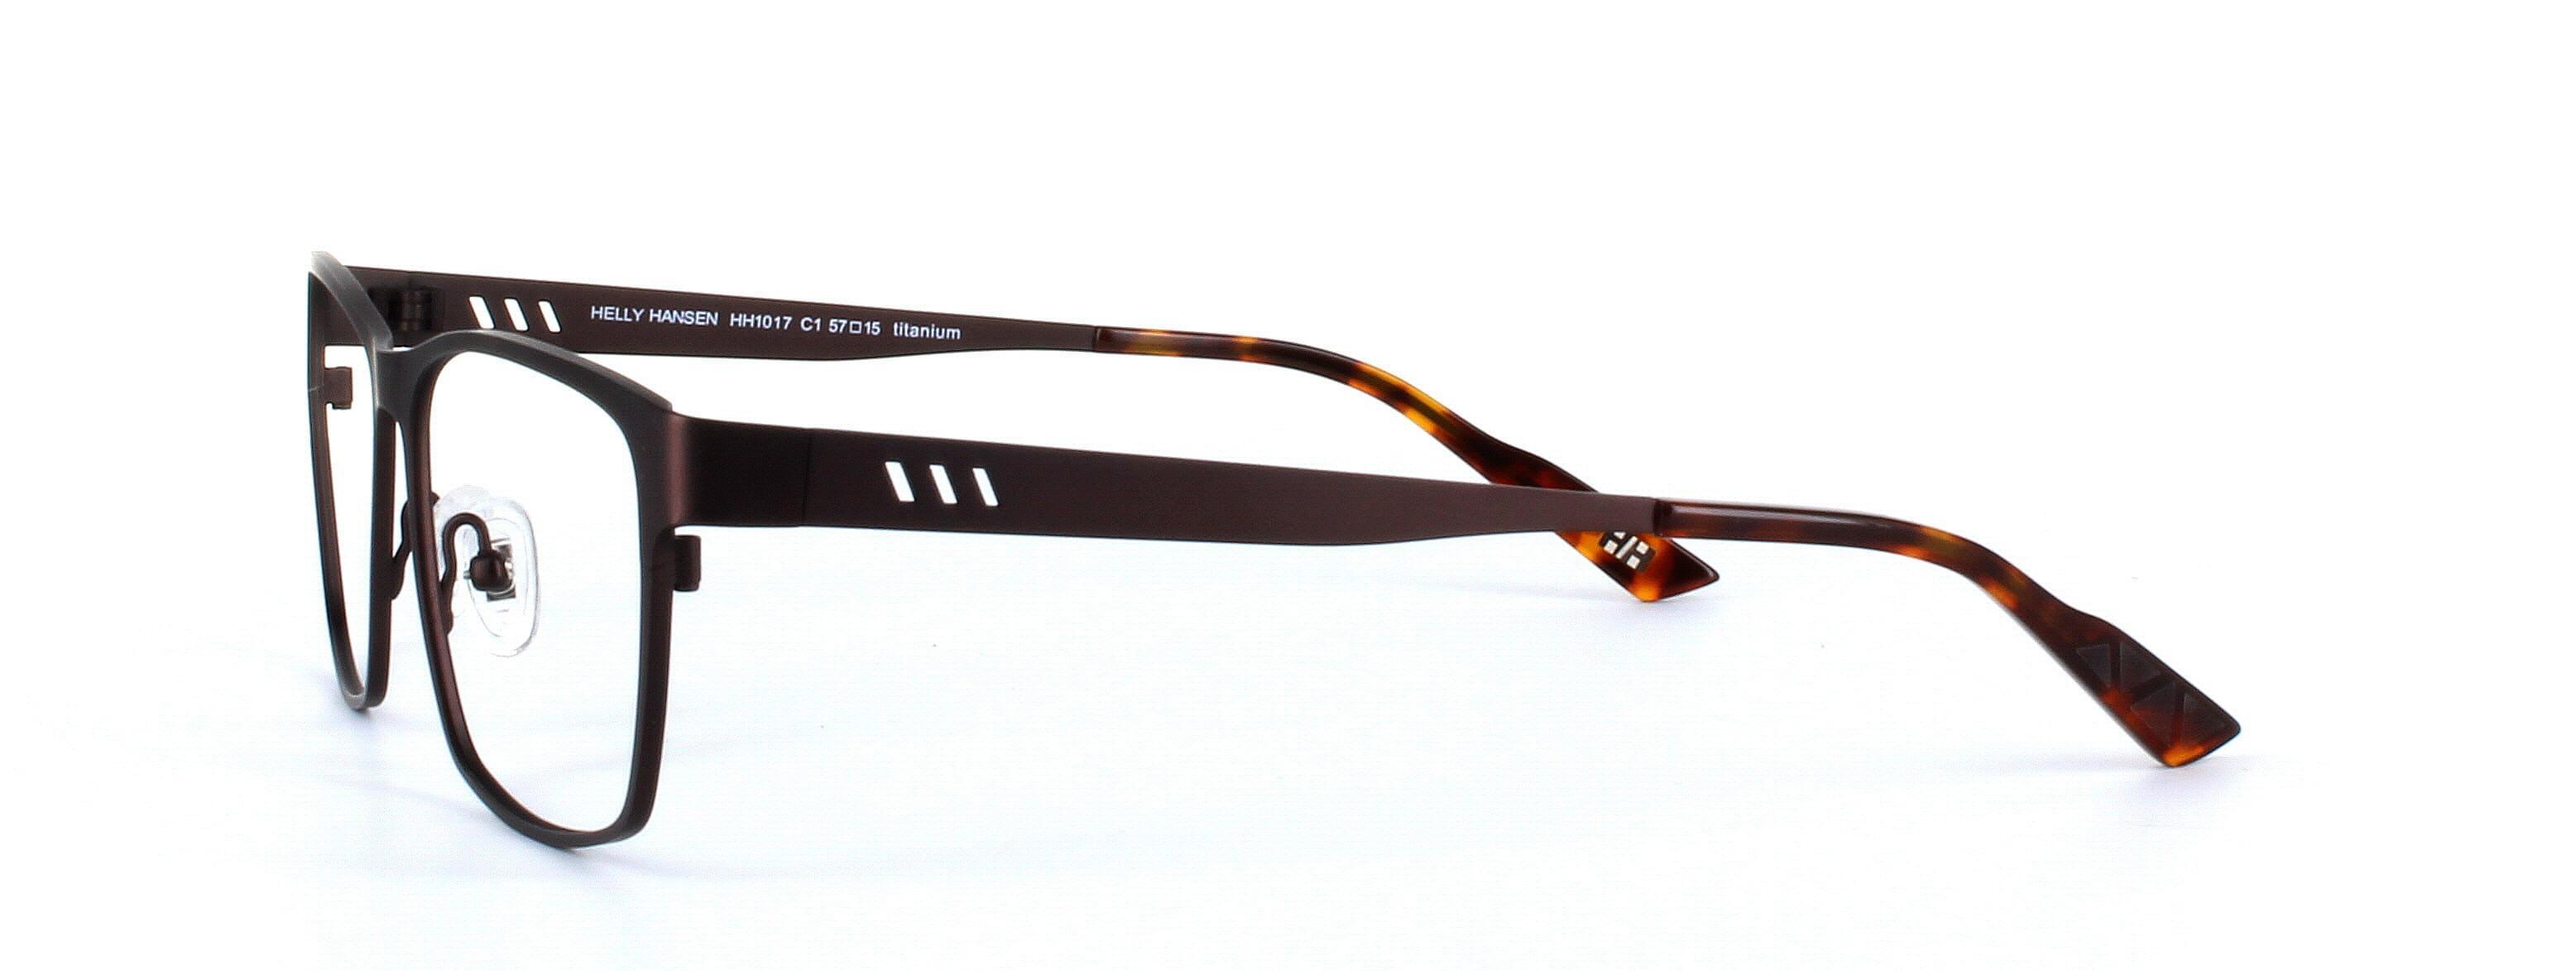 Helly Hansen HH 1017 Brown Full Rim Rectangular Metal Glasses - Image View 2